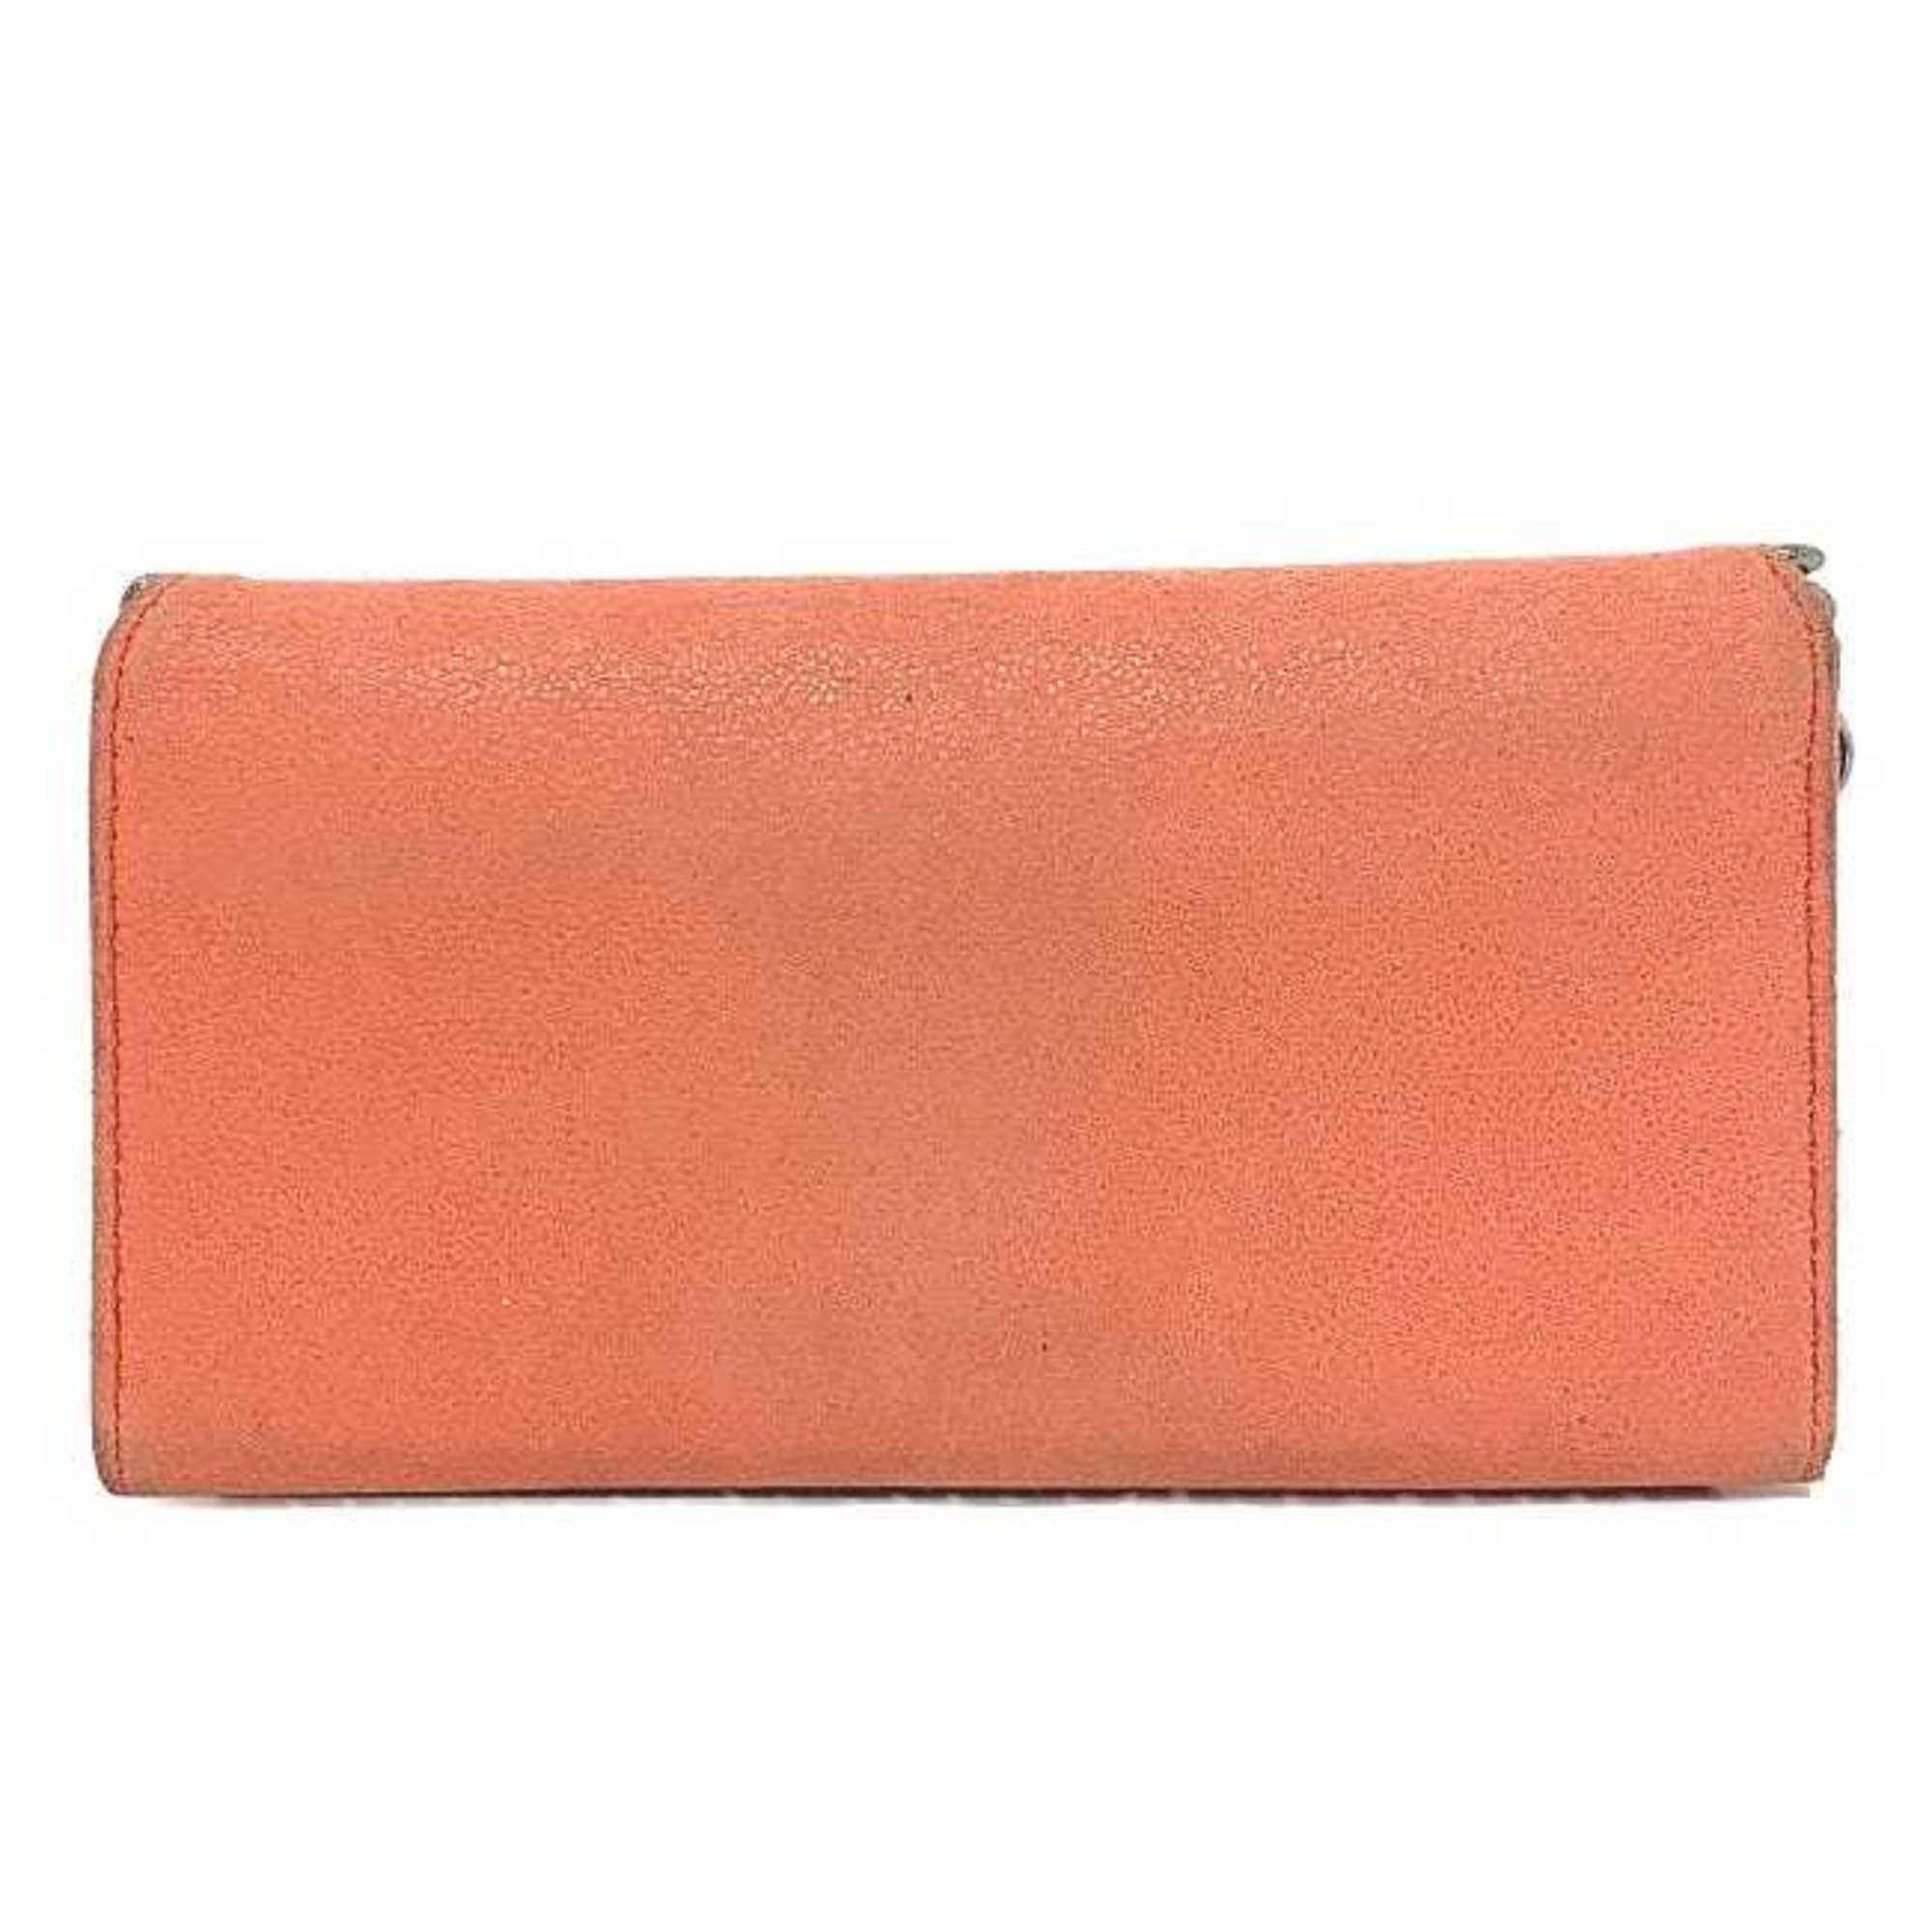 Stella McCartney Folio Long Wallet Salmon Pink Falabella 235642 Polyester Leather STELLA McCARTNEY Chain Women's